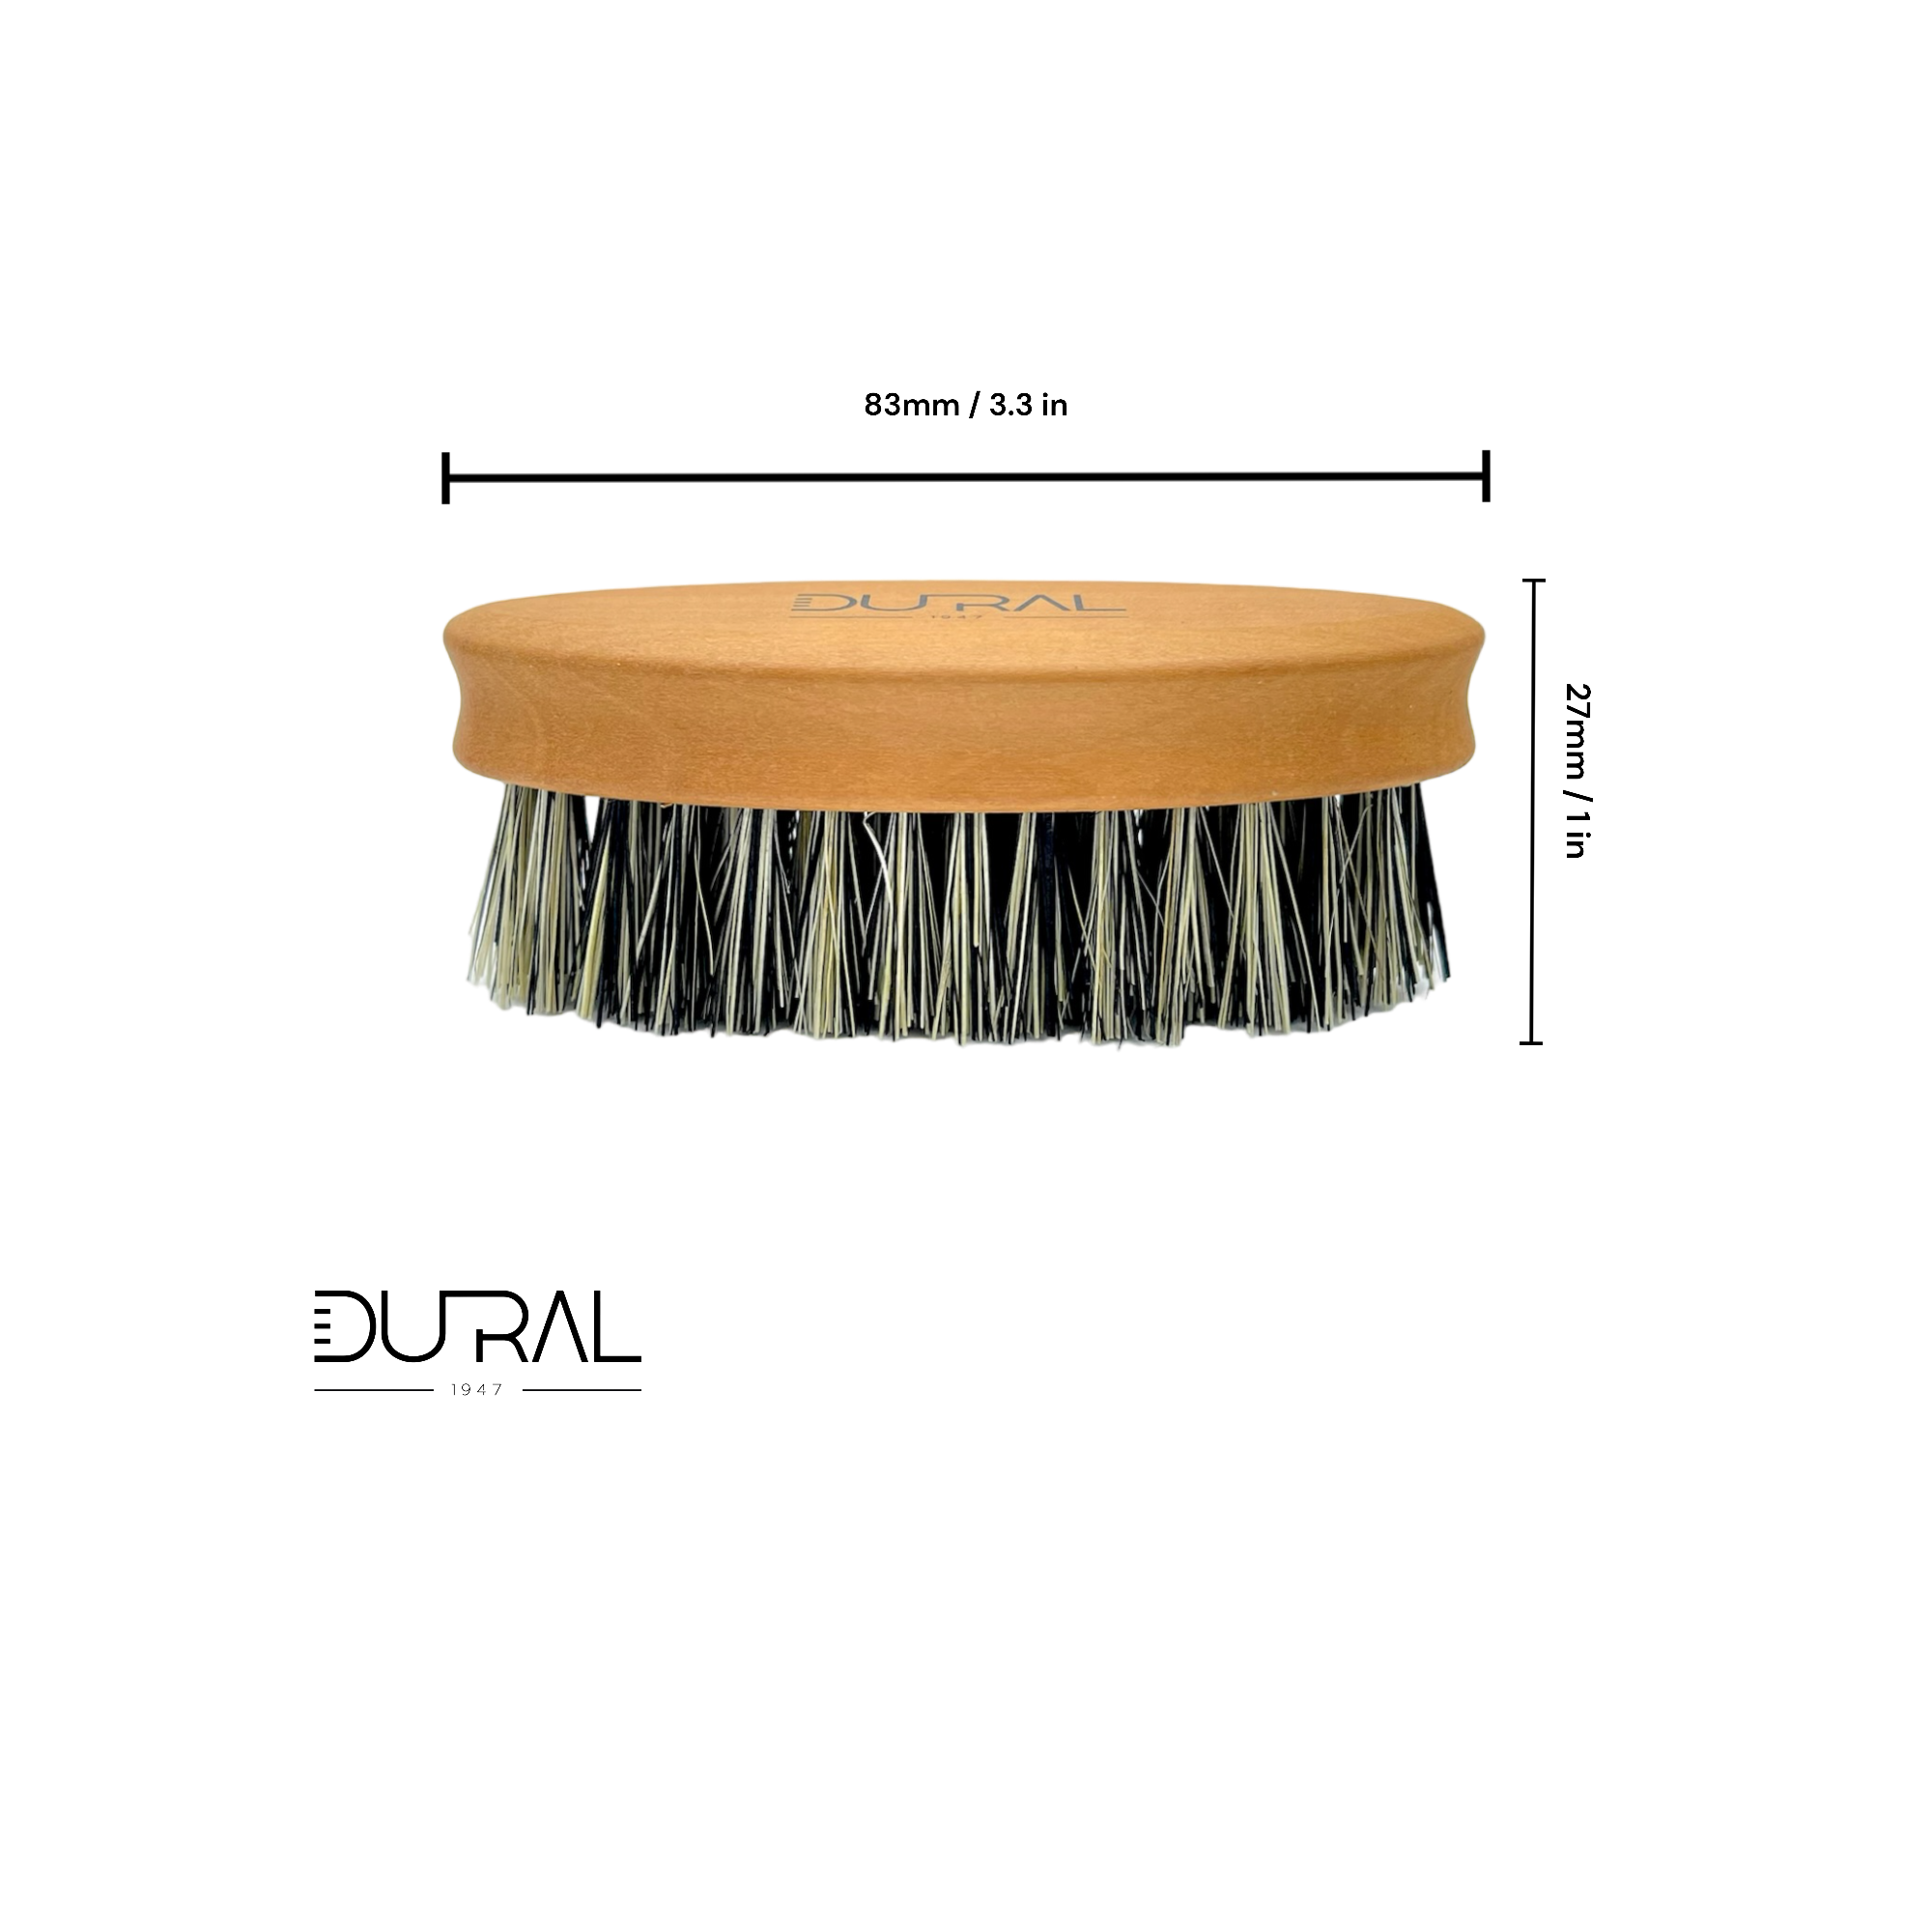 Dural Pear wood beard brush with pure Tampico fiber - Halal compliant & Vegan